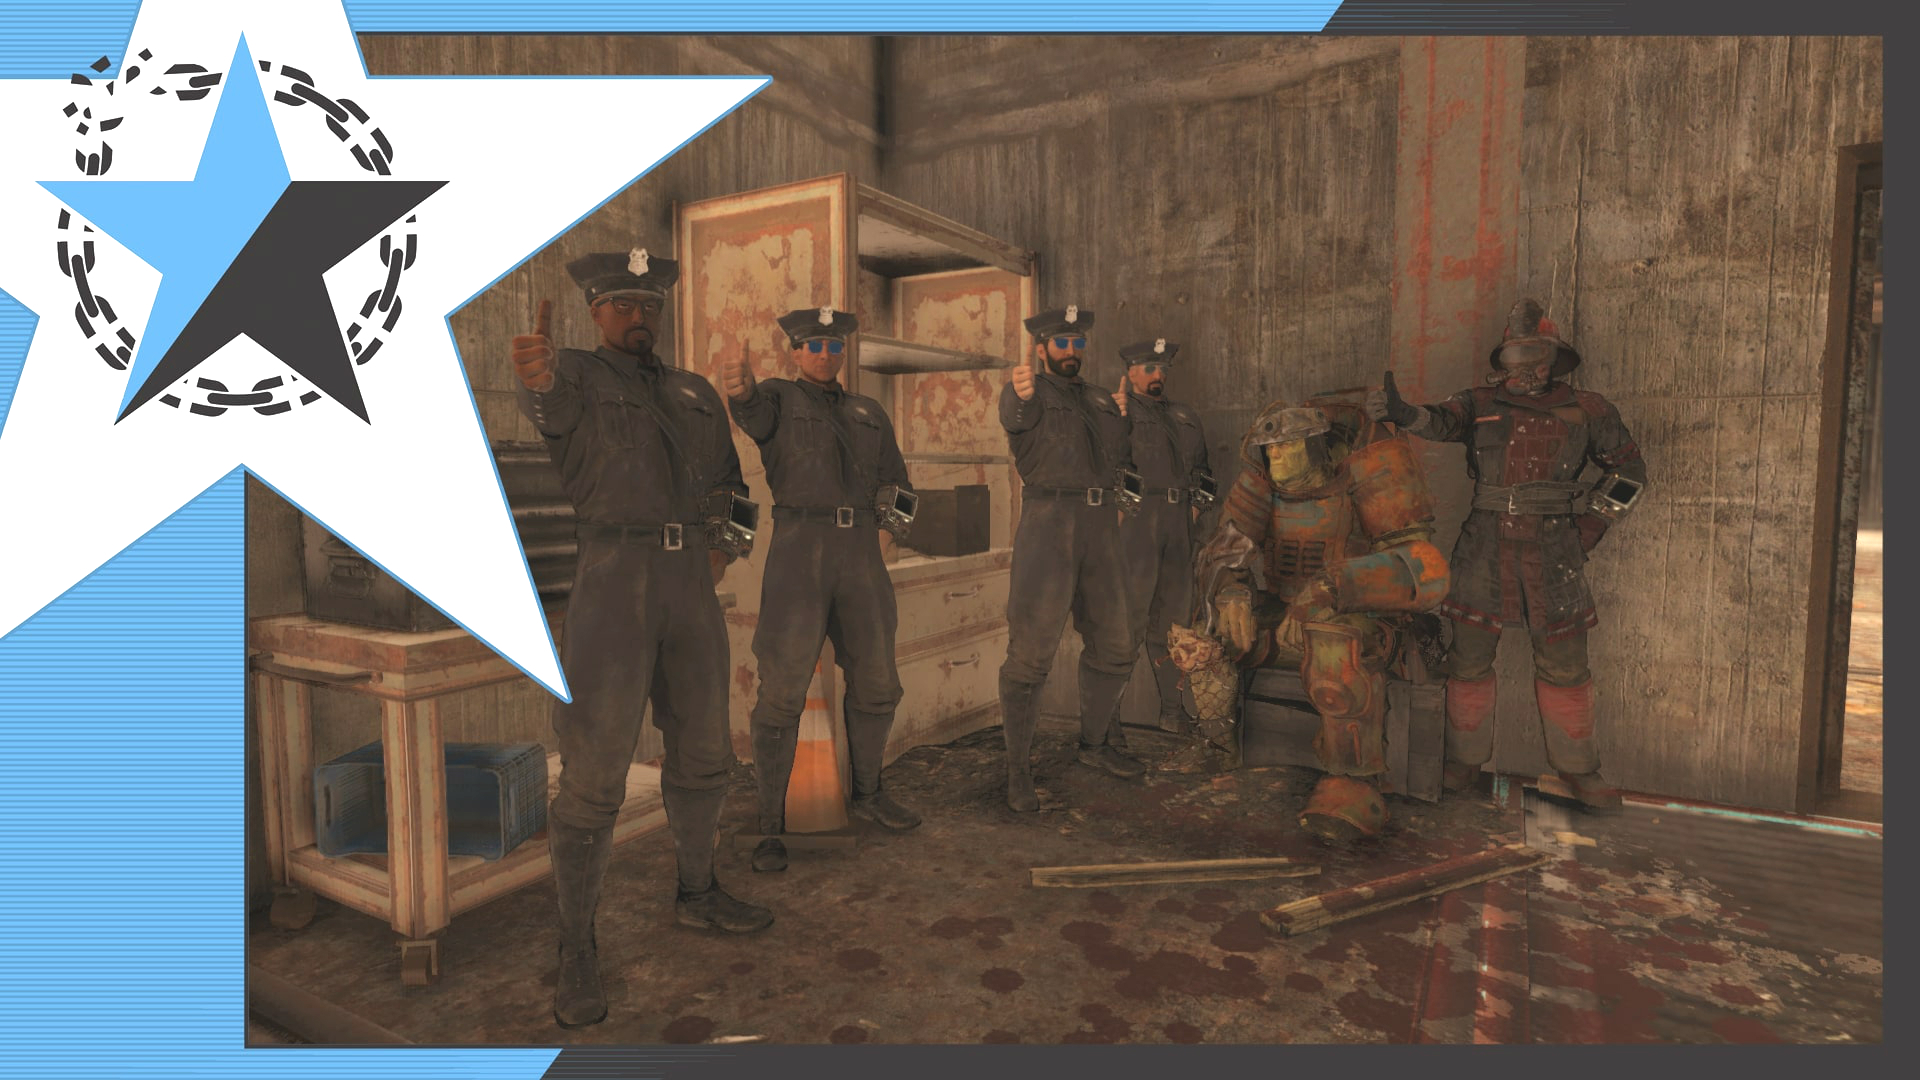 Fallout 76 PS4 Community